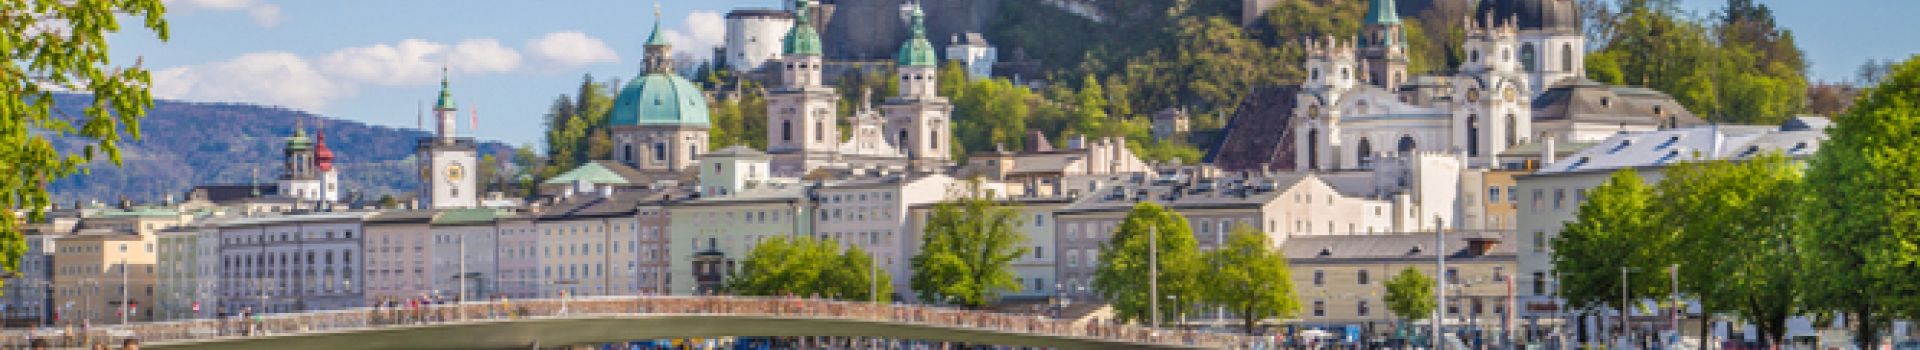 Cheap city breaks to Salzburg